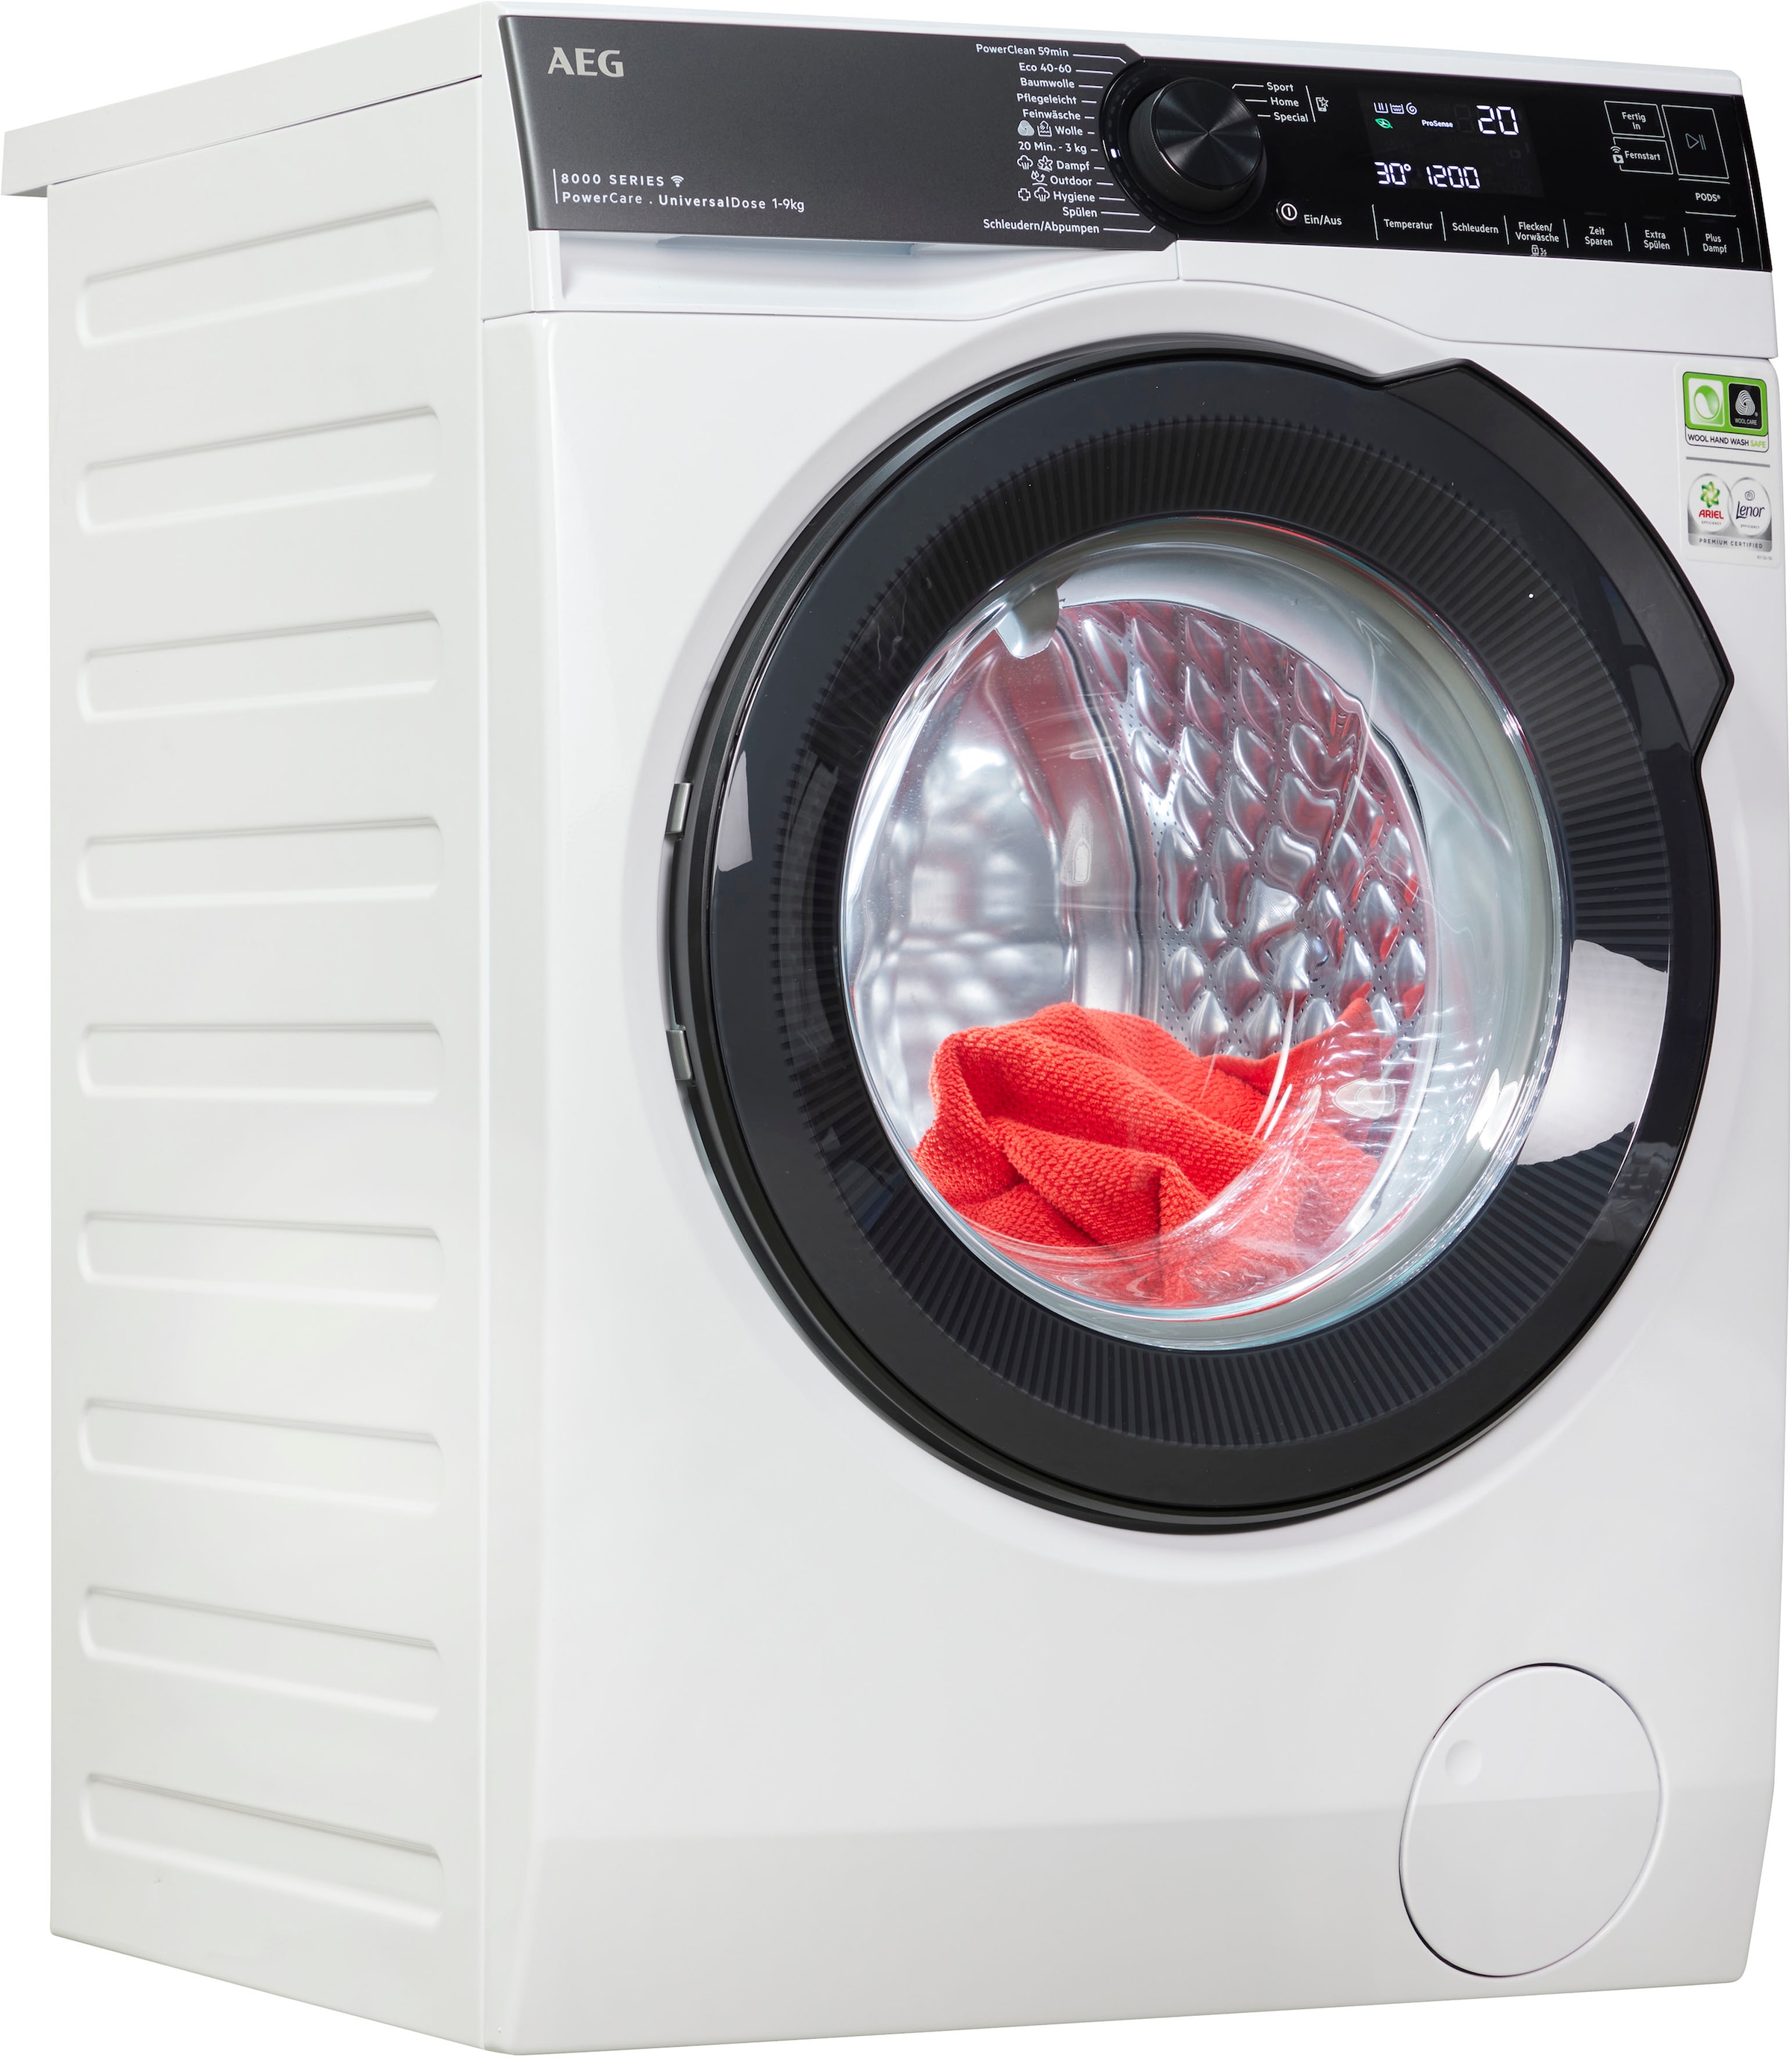 AEG Waschmaschine bei 1400 online U/min, - nur & PowerClean in LR8E75490, 30 Min. kg, °C »LR8E75490«, PowerCare, 9 bei Fleckenentfernung 8000 OTTO 59 Wifi